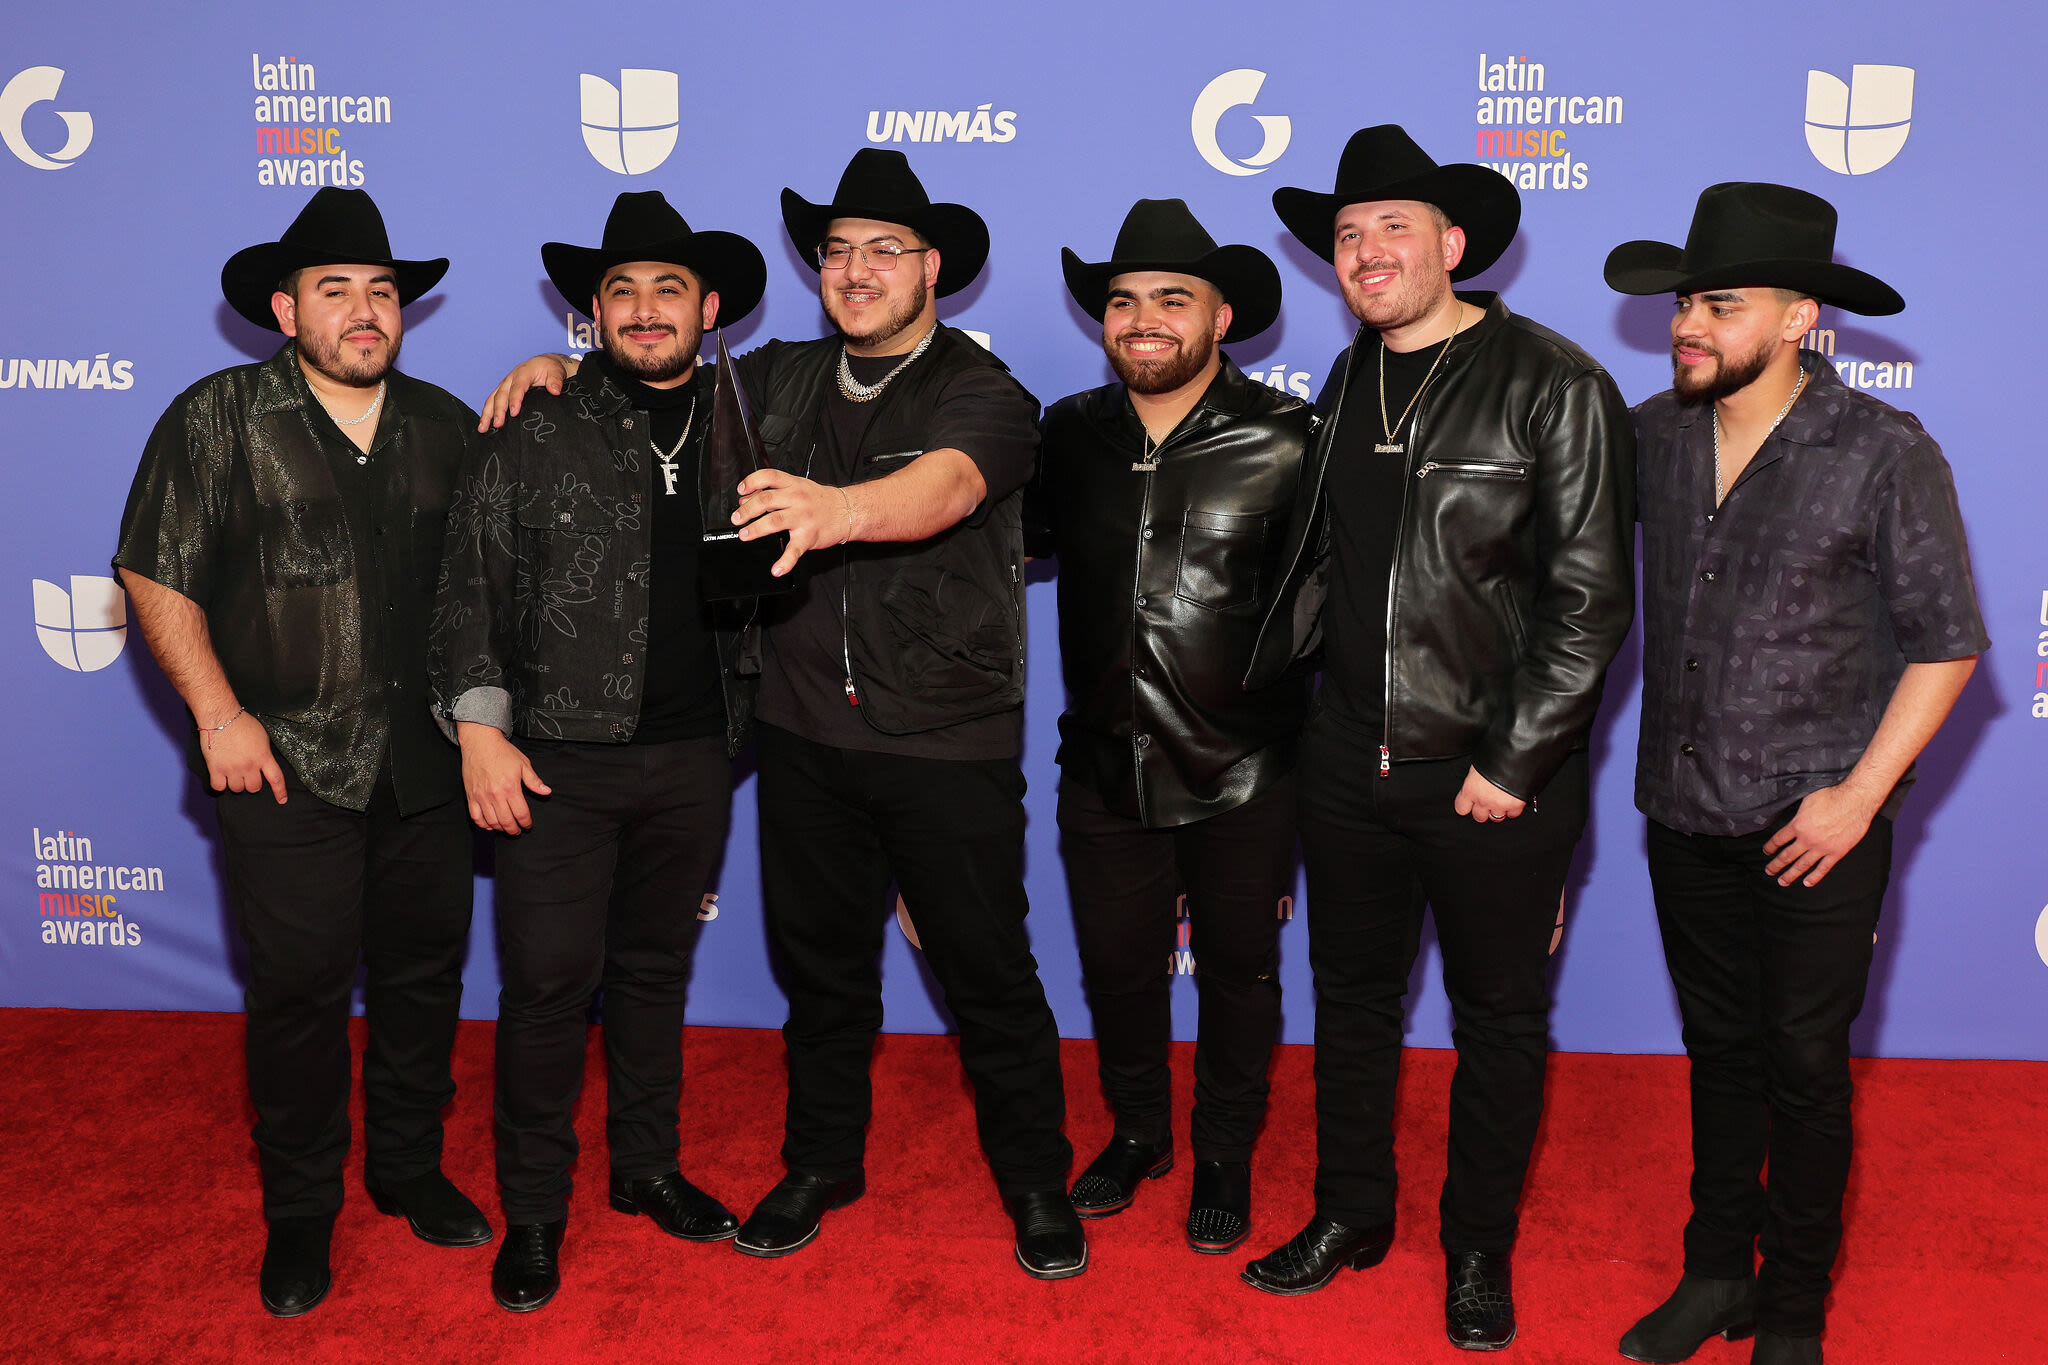 Texas-based Mexican band announces San Antonio stop for tour